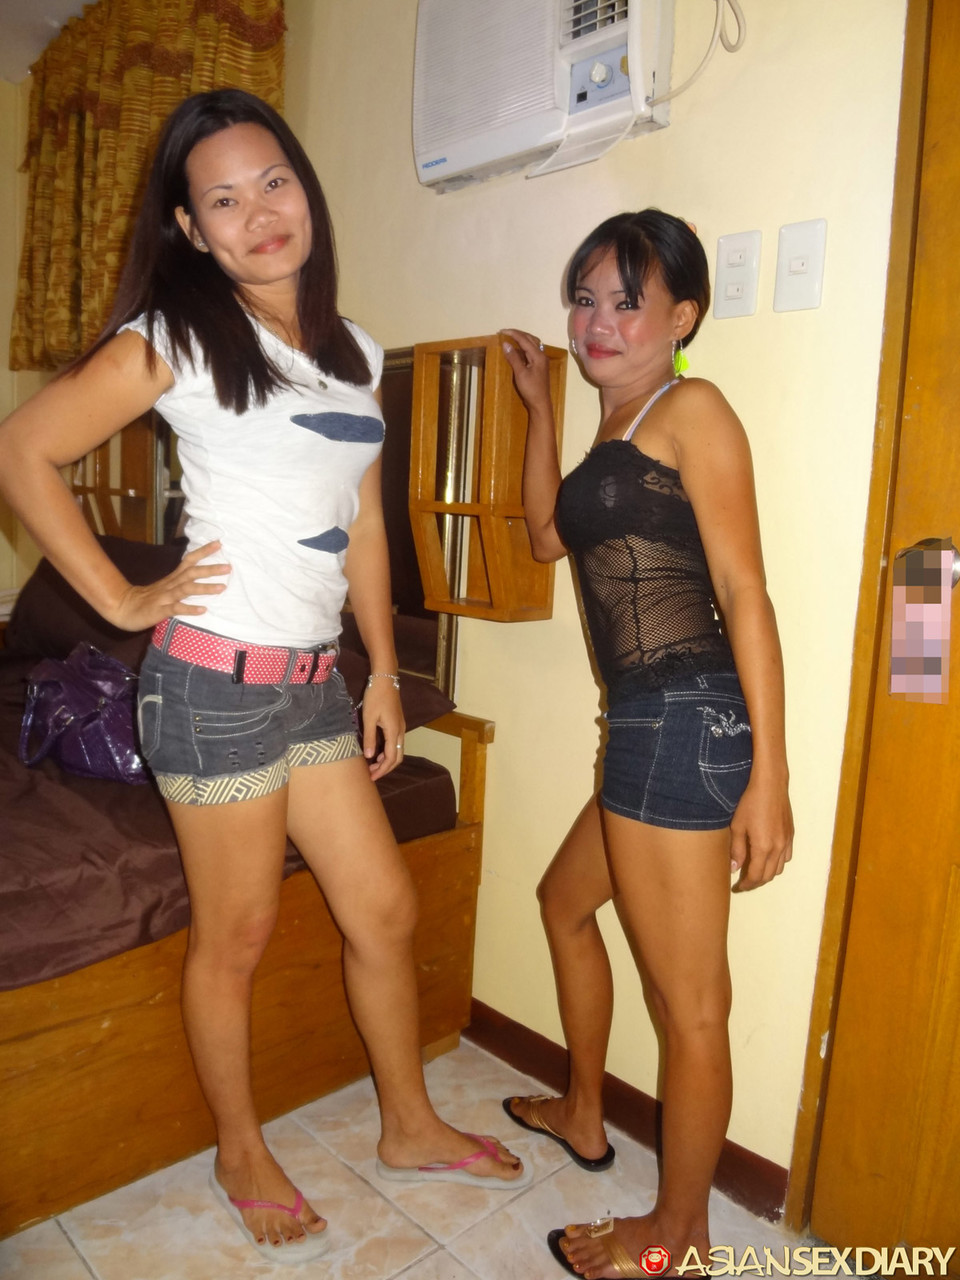 Horny Asian girls take selfies and fuck lucky tourist while enjoying free AC ポルノ写真 #422594945 | Asian Sex Diary Pics, Leann, Irish, Selfie, モバイルポルノ